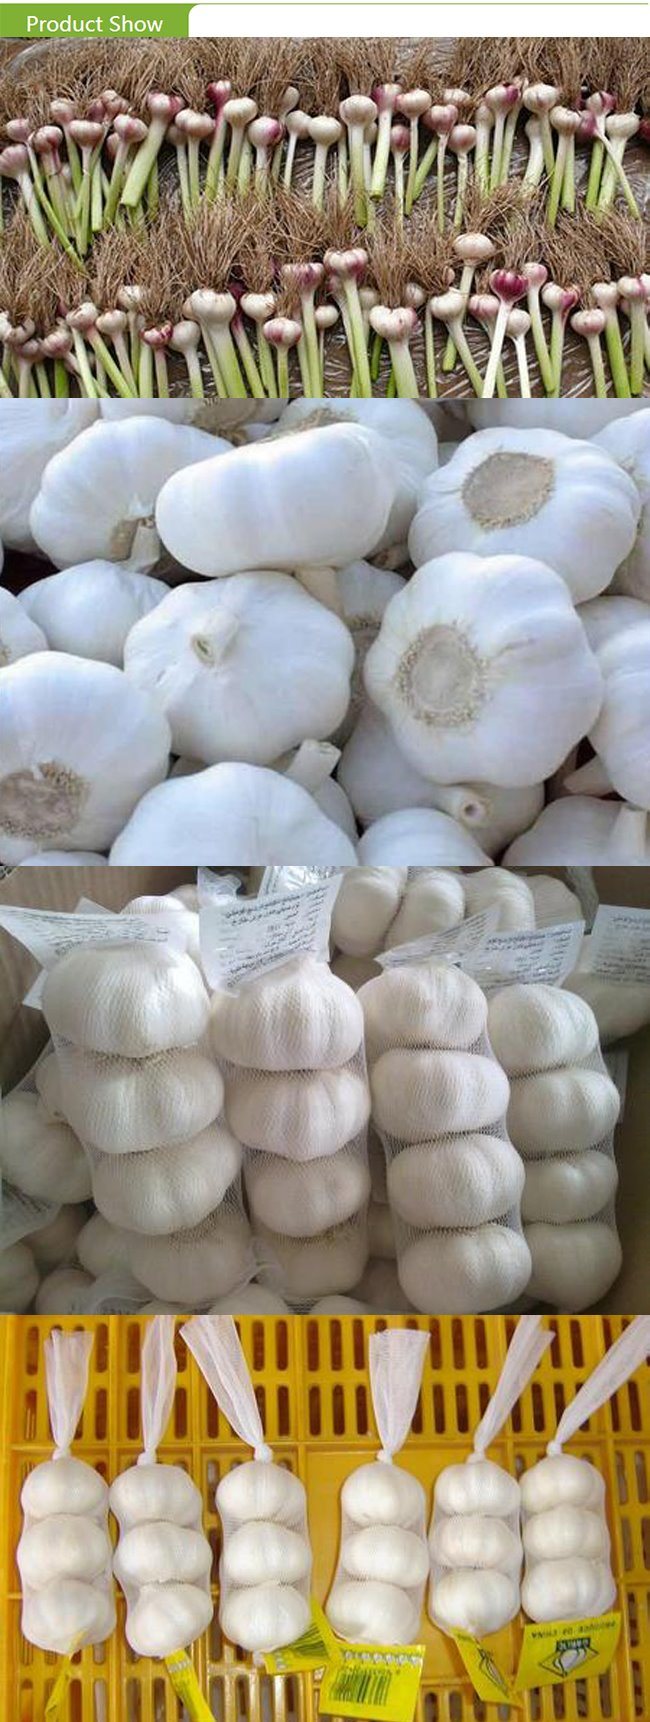 Frozen Garlic Puree with Good Price